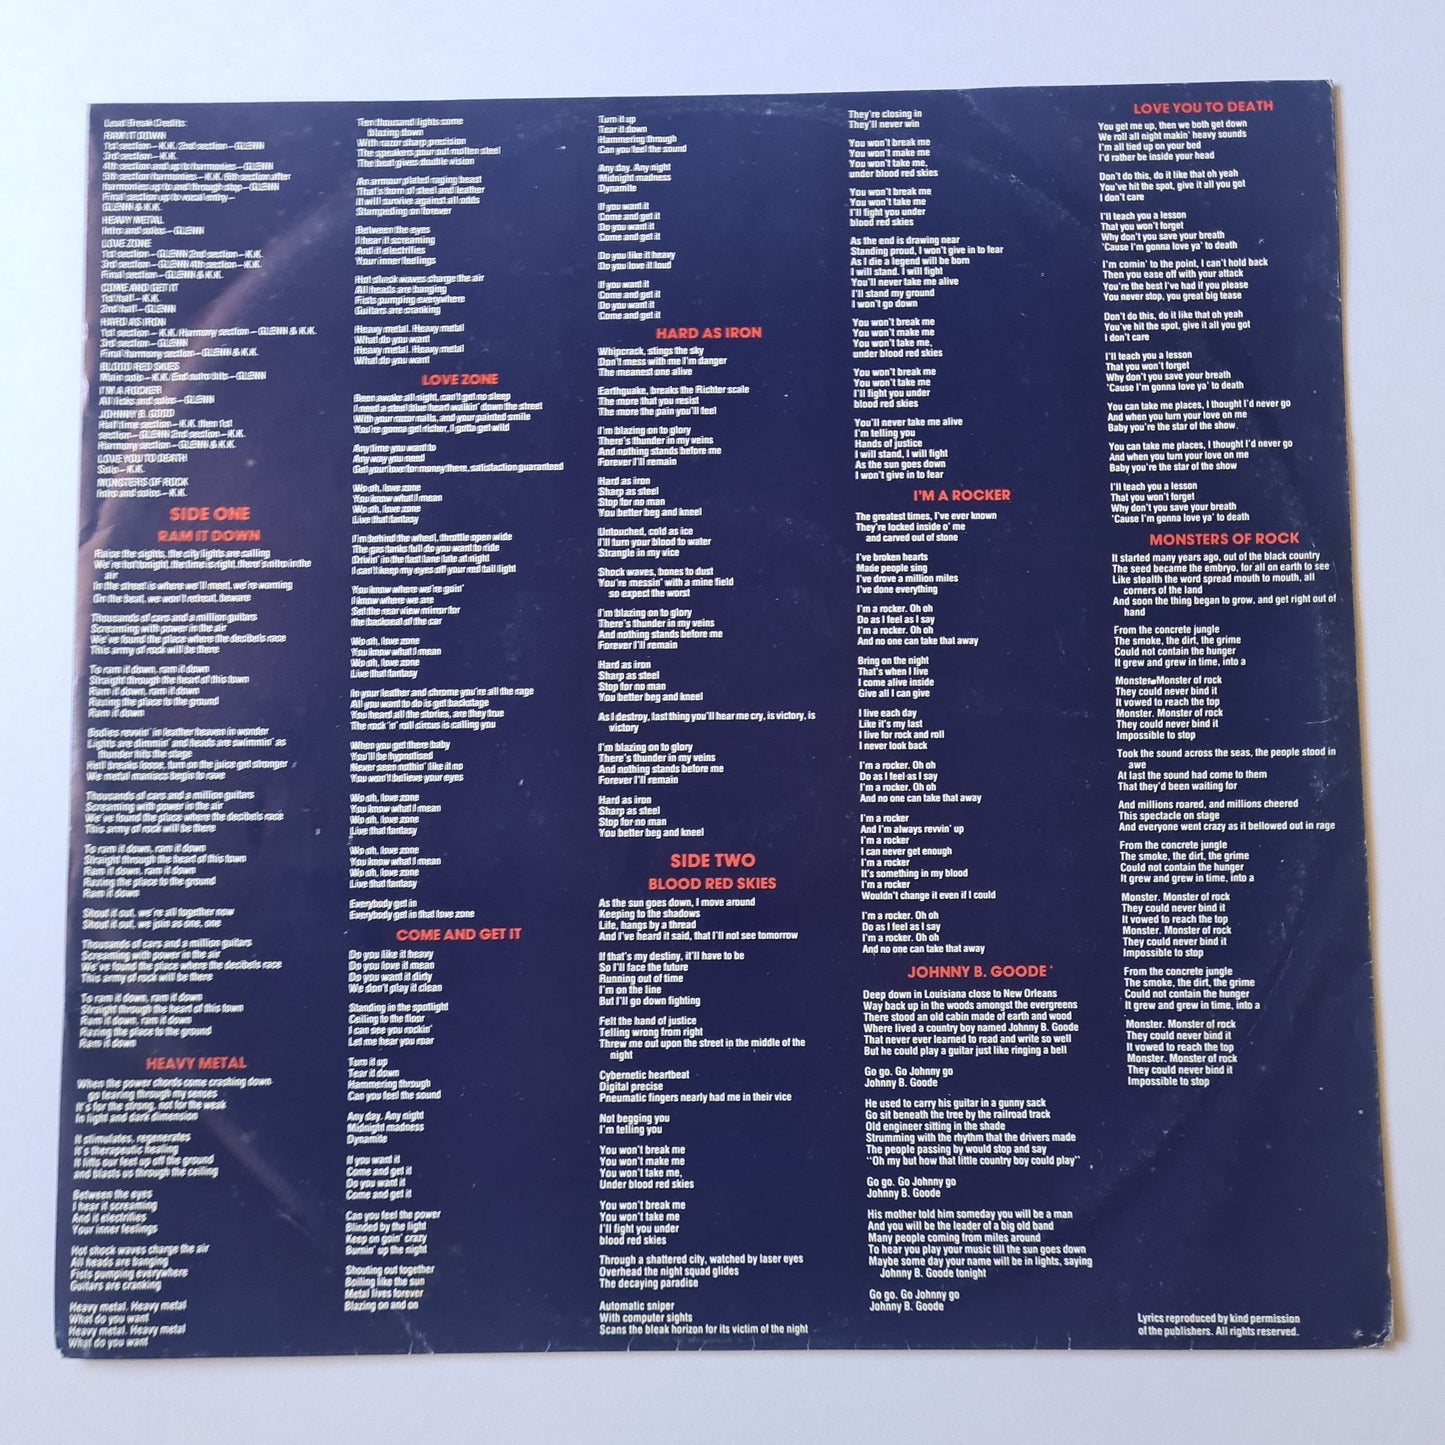 Judas Priest – Ram It Down - 1988 - Vinyl Record